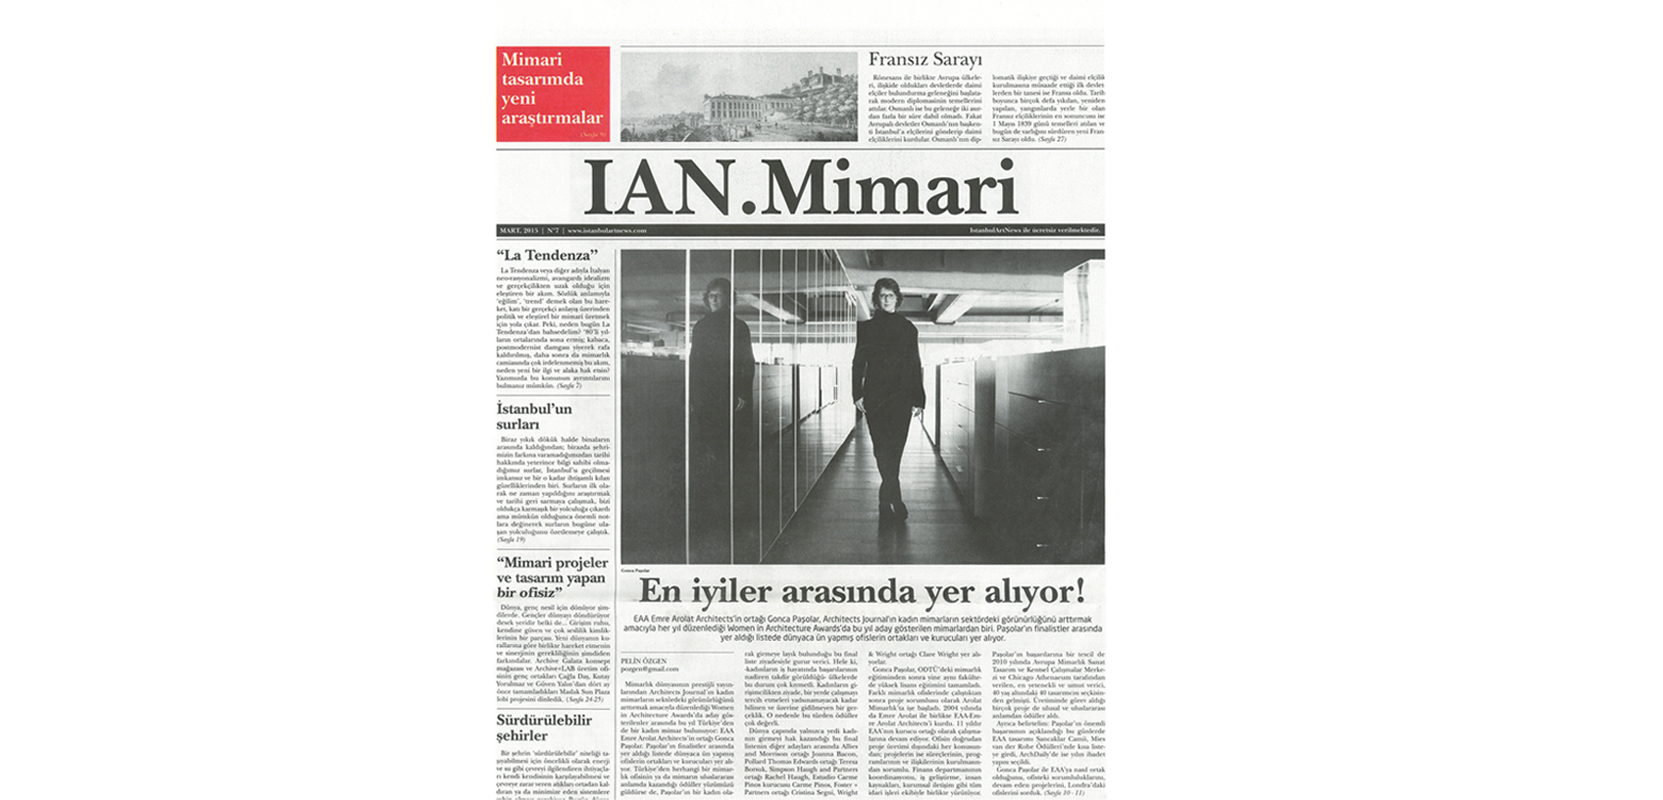 EAA – EMRE AROLAT ARCHITECTURE | Gonca Pasolar About Eaa On Istanbul Art News